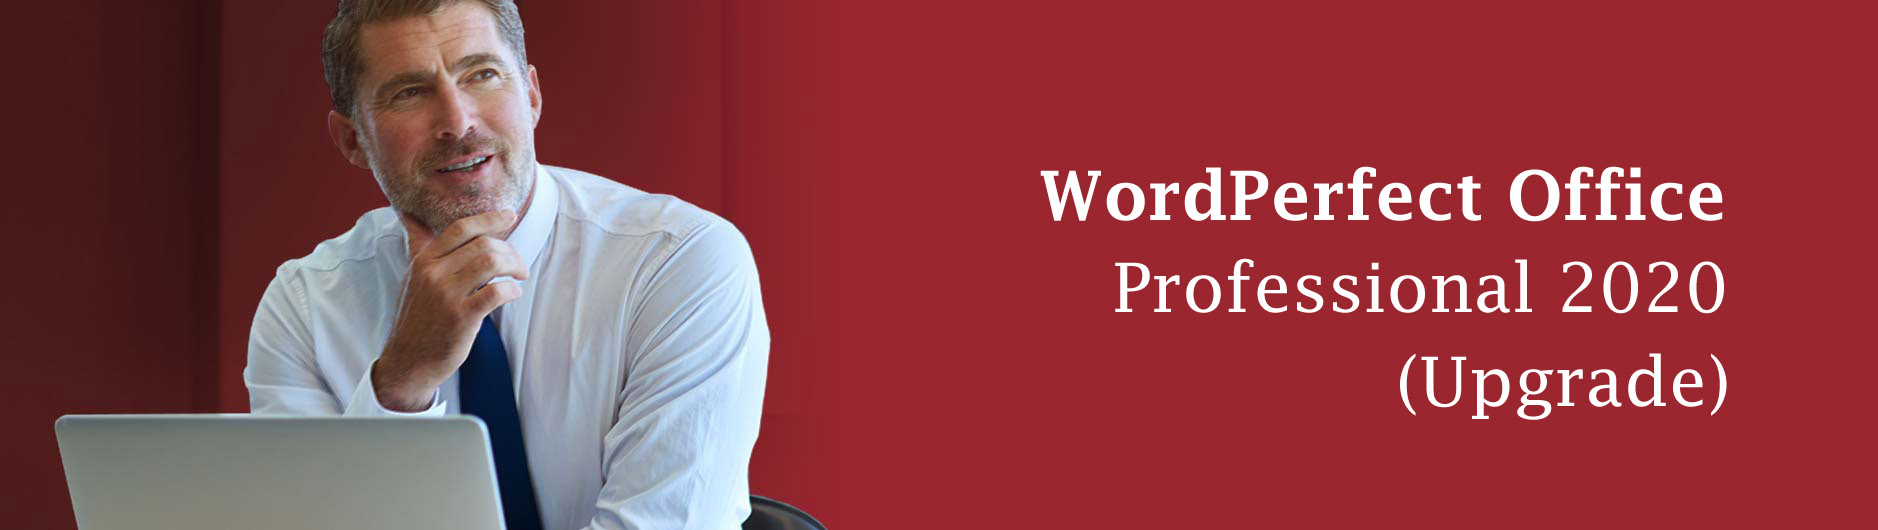 WordPerfect Office Professional 2020 Upgrade